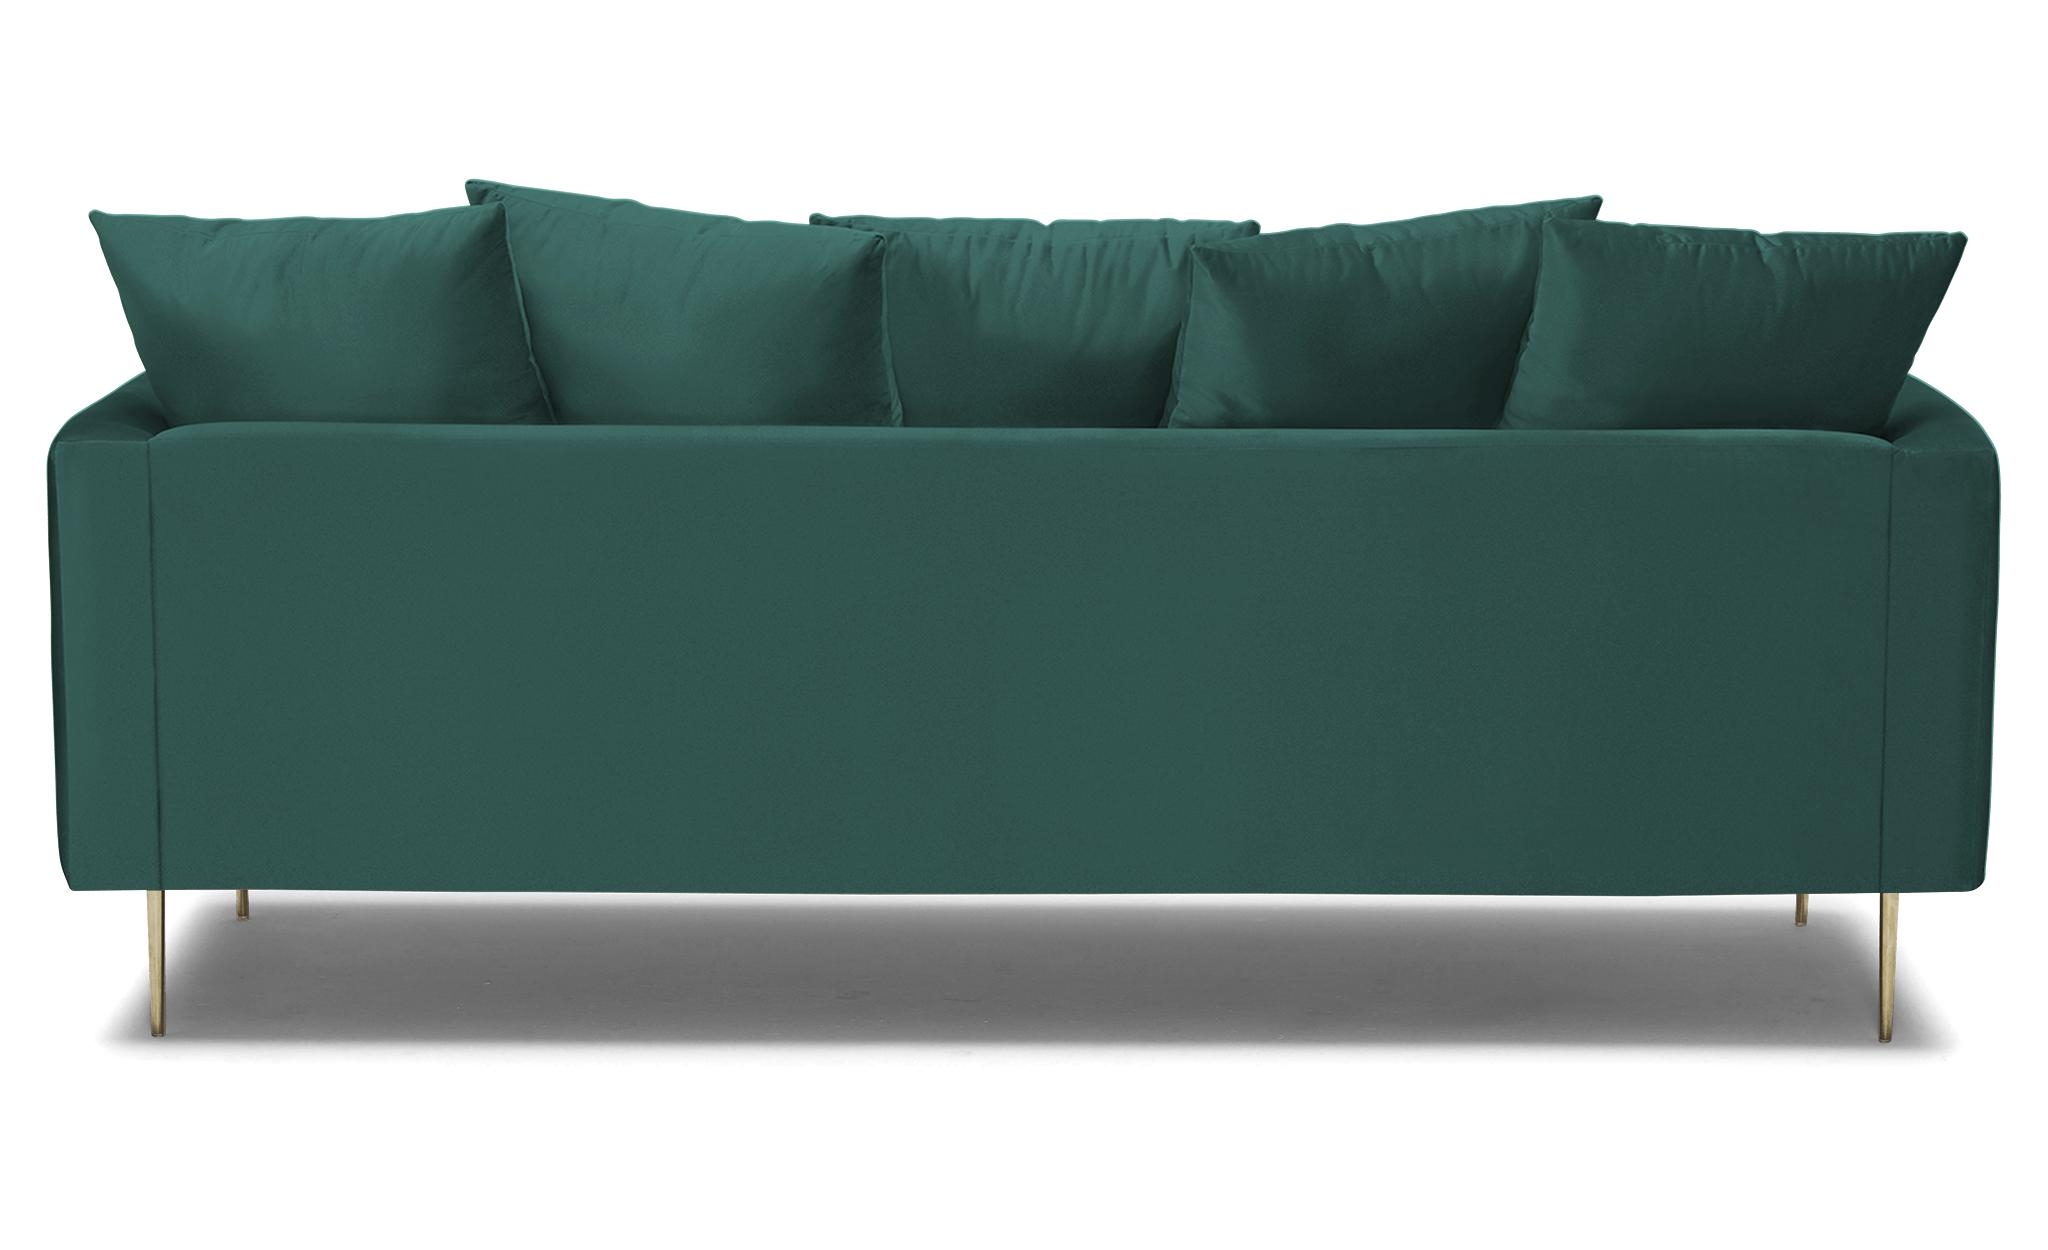 Blue Aime Mid Century Modern Sofa - Prime Peacock - Image 4